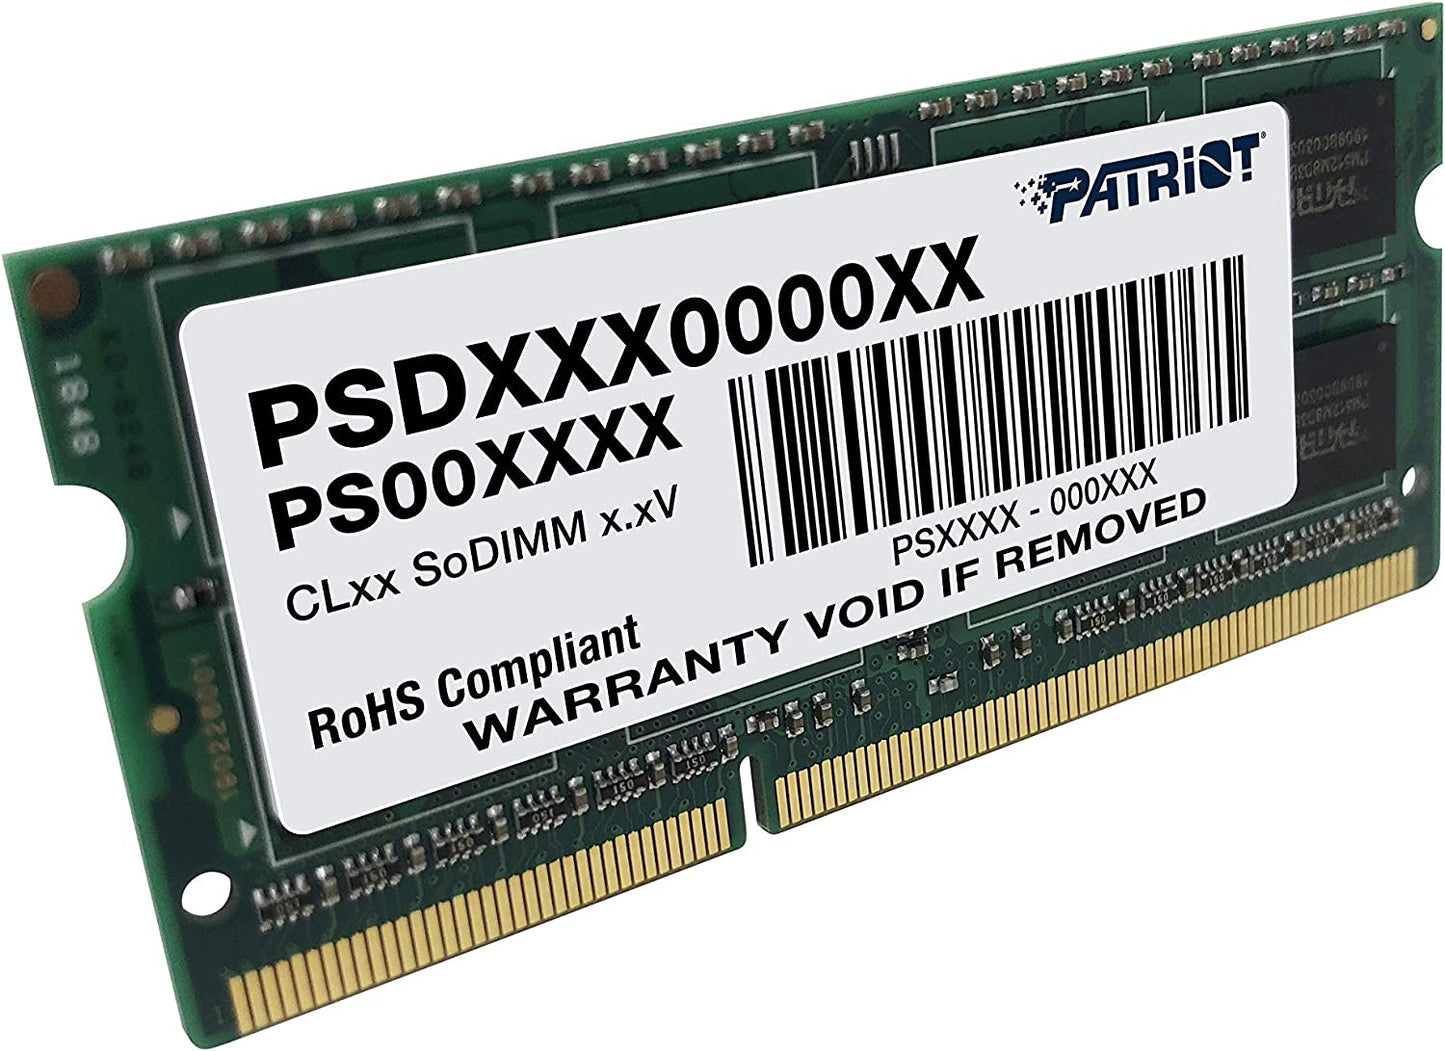 8GB DDR3 PC3-12800 (1600MHz) SODIMM (for Notebooks), Low Voltage, 1.35V - MYN-8GBDDR3L